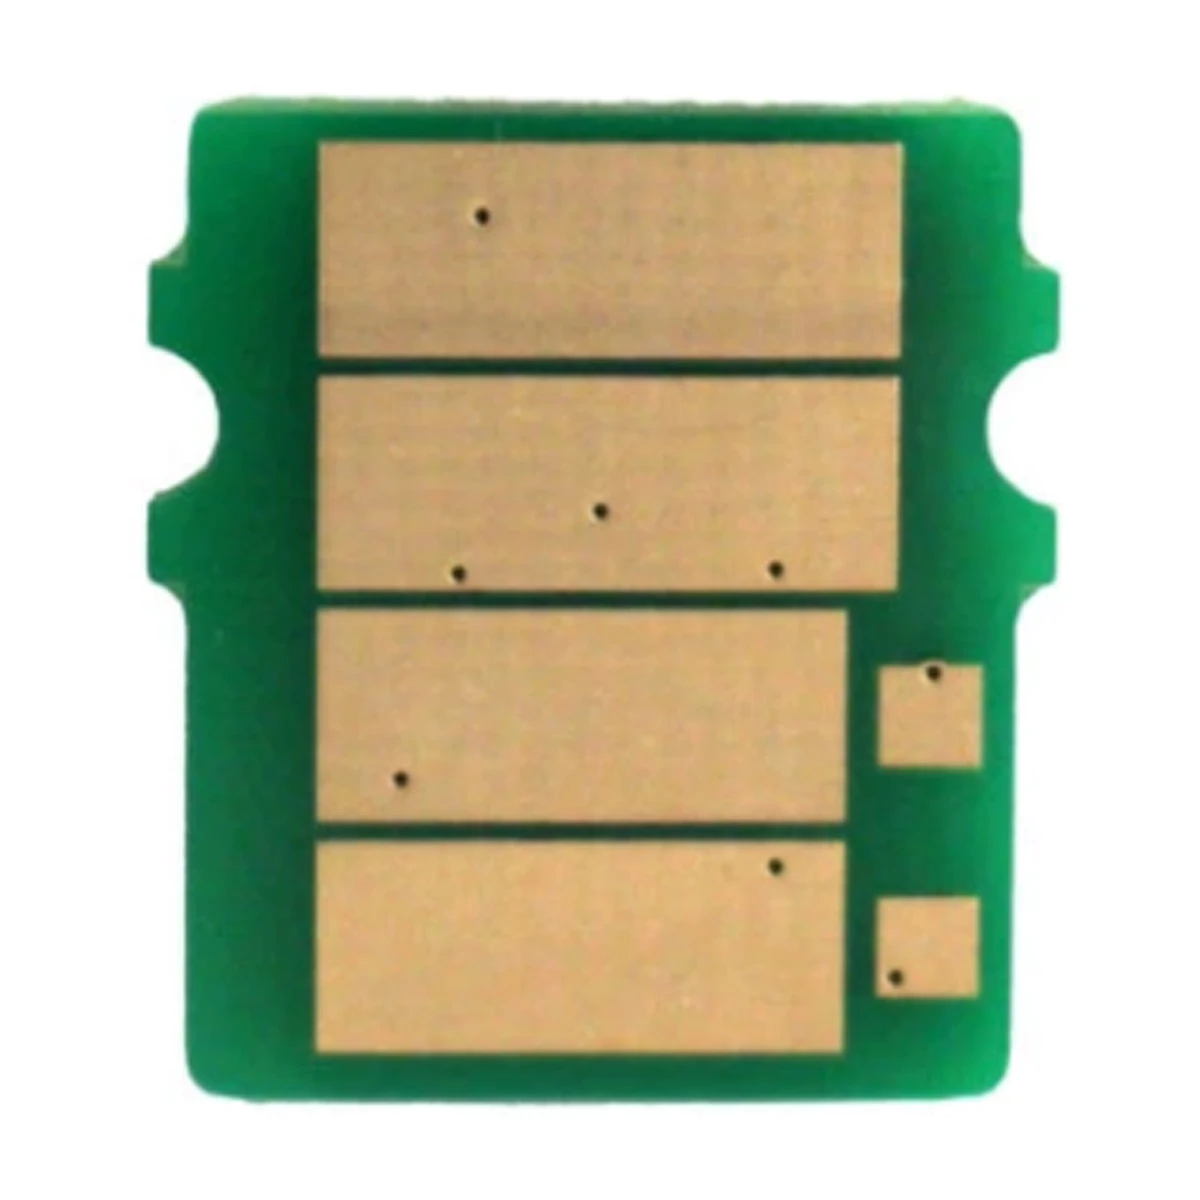 

3K TN-2420 TN-2450 TN2445 TN760 Toner cartridge chip For Brother HL-L2310 HL-L2350DW MFC-L2710DN MFC-L2750DW MFC-L2730DW L2510D